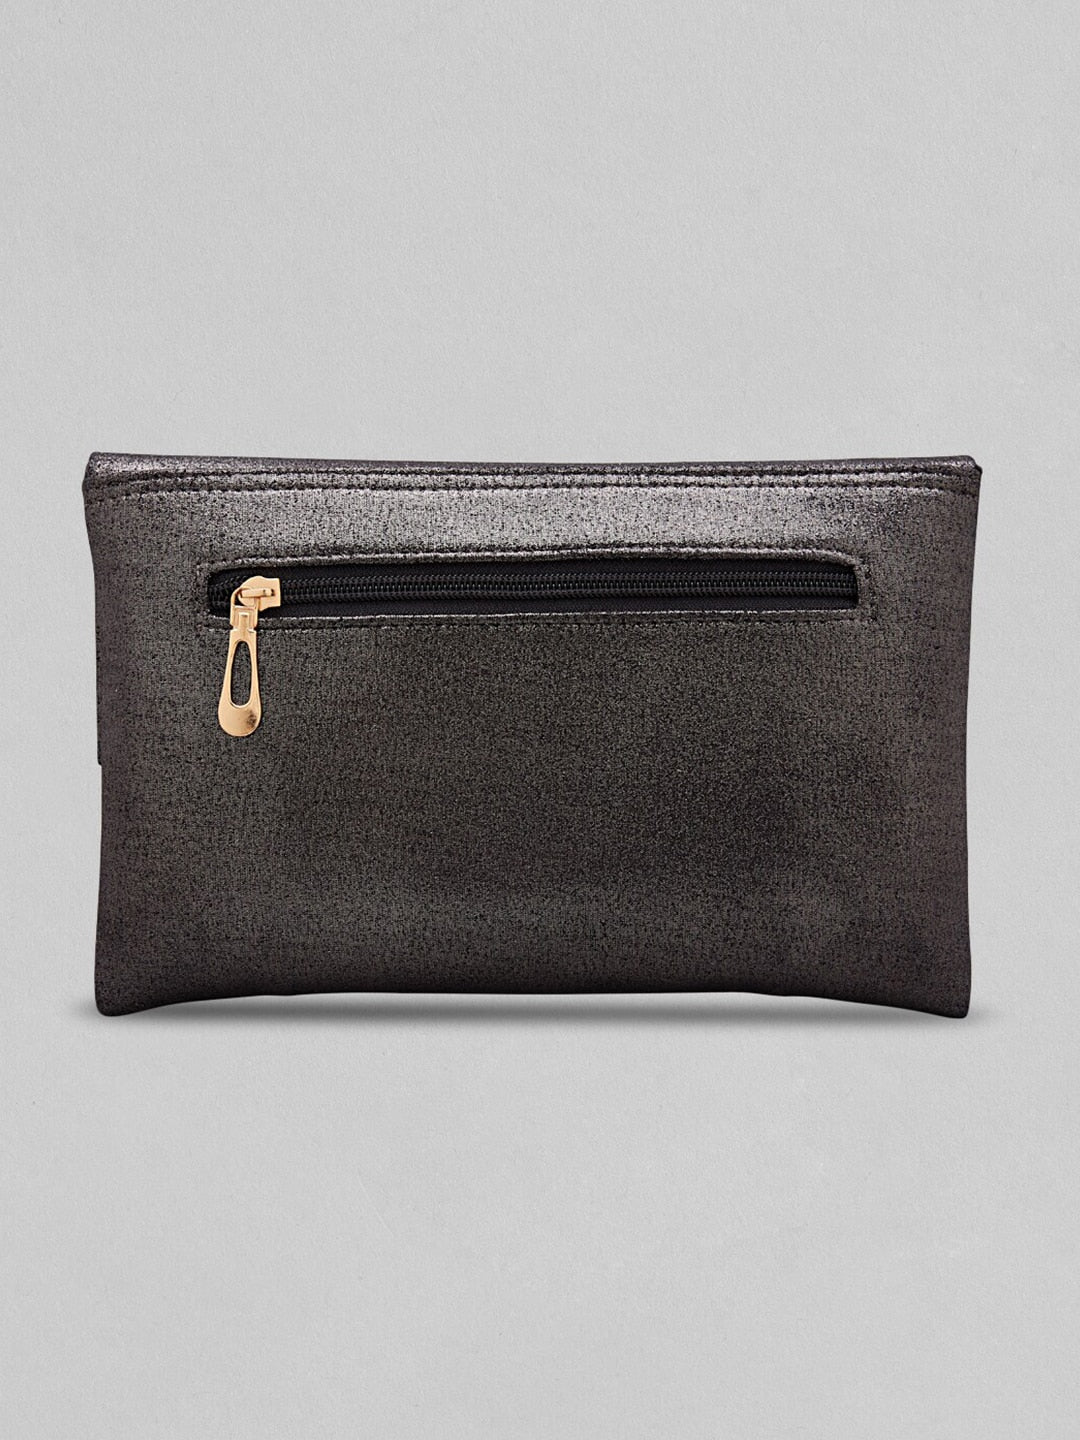 Buy Burgundy Leather Purse, Clutch Envelope Clutch Crossbody Bag Handbag  Crossover Purse Large Clutch Bag Erato Clutch Online in India - Etsy